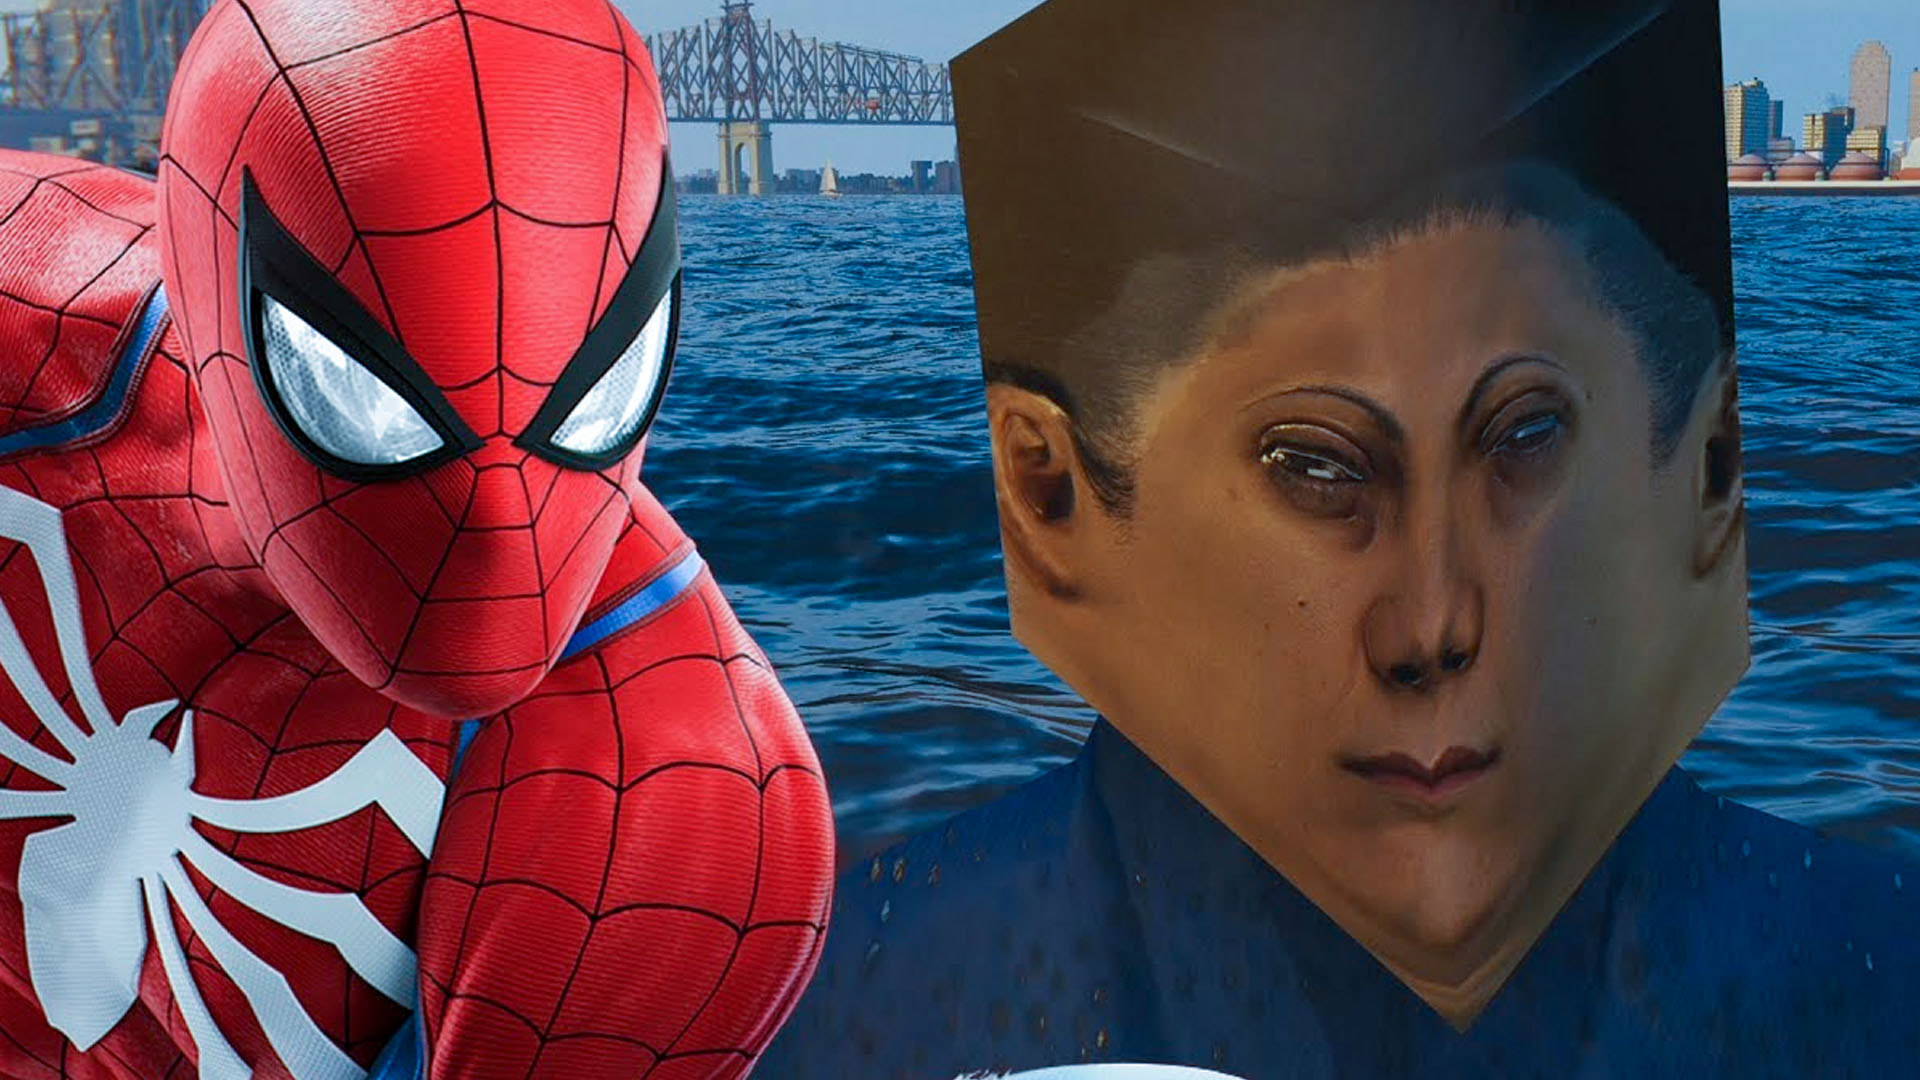 Шрек человек паук. Человек паук картинки. Spider man 2018 люди в лодках. Человек паук лицо. Человек паук в реальной жизни.